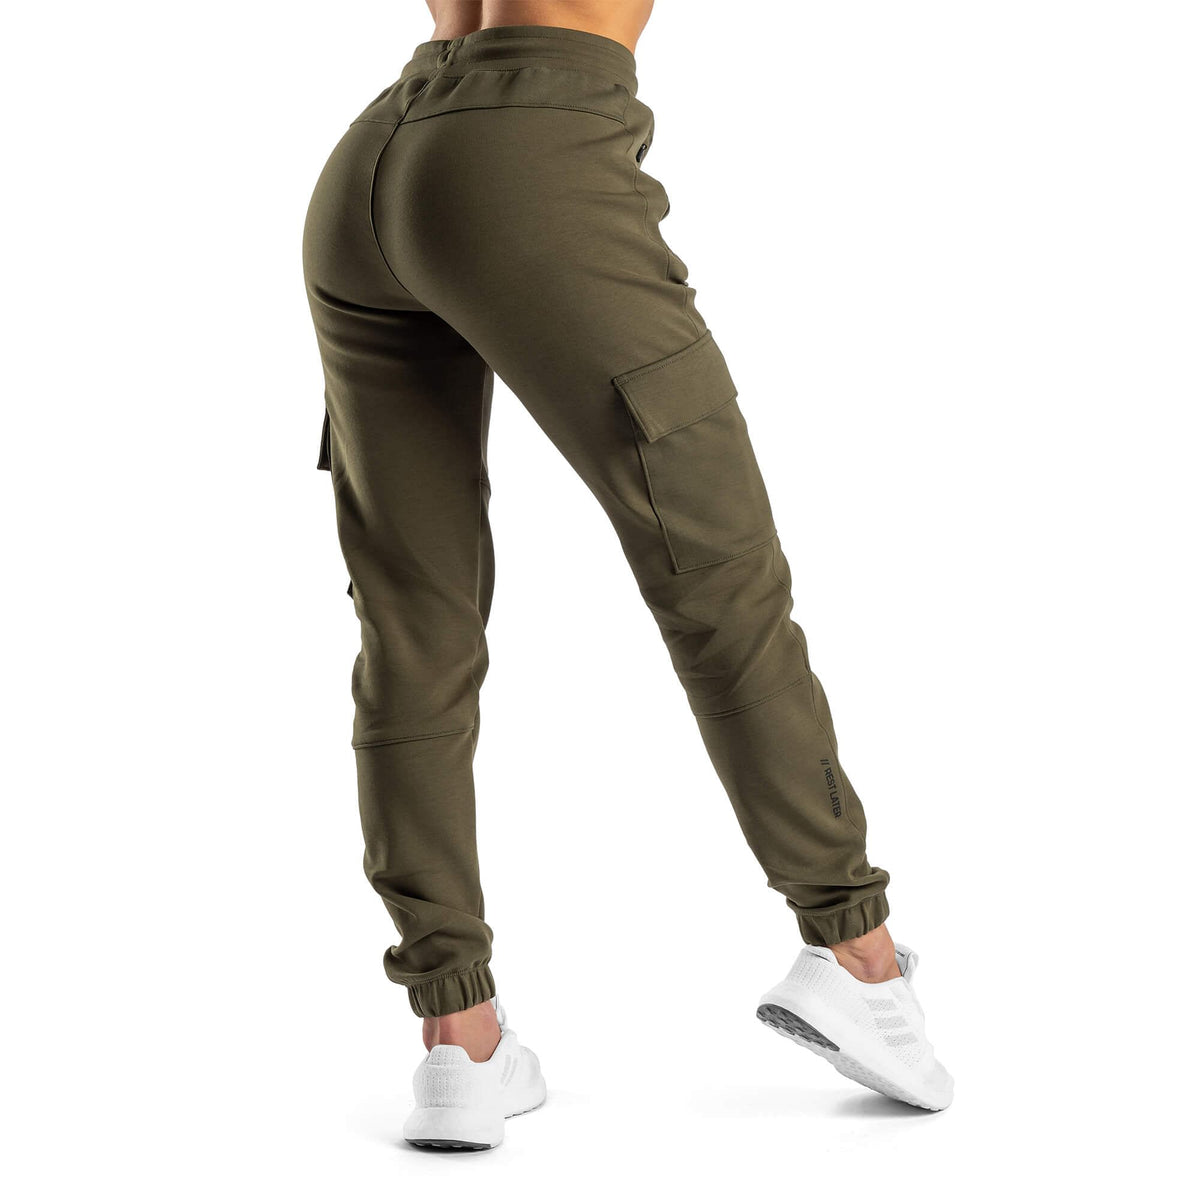 Womens Camo Leggings Stretchy Body Full Shaper Army Spandex Thin Workout  Pants | eBay